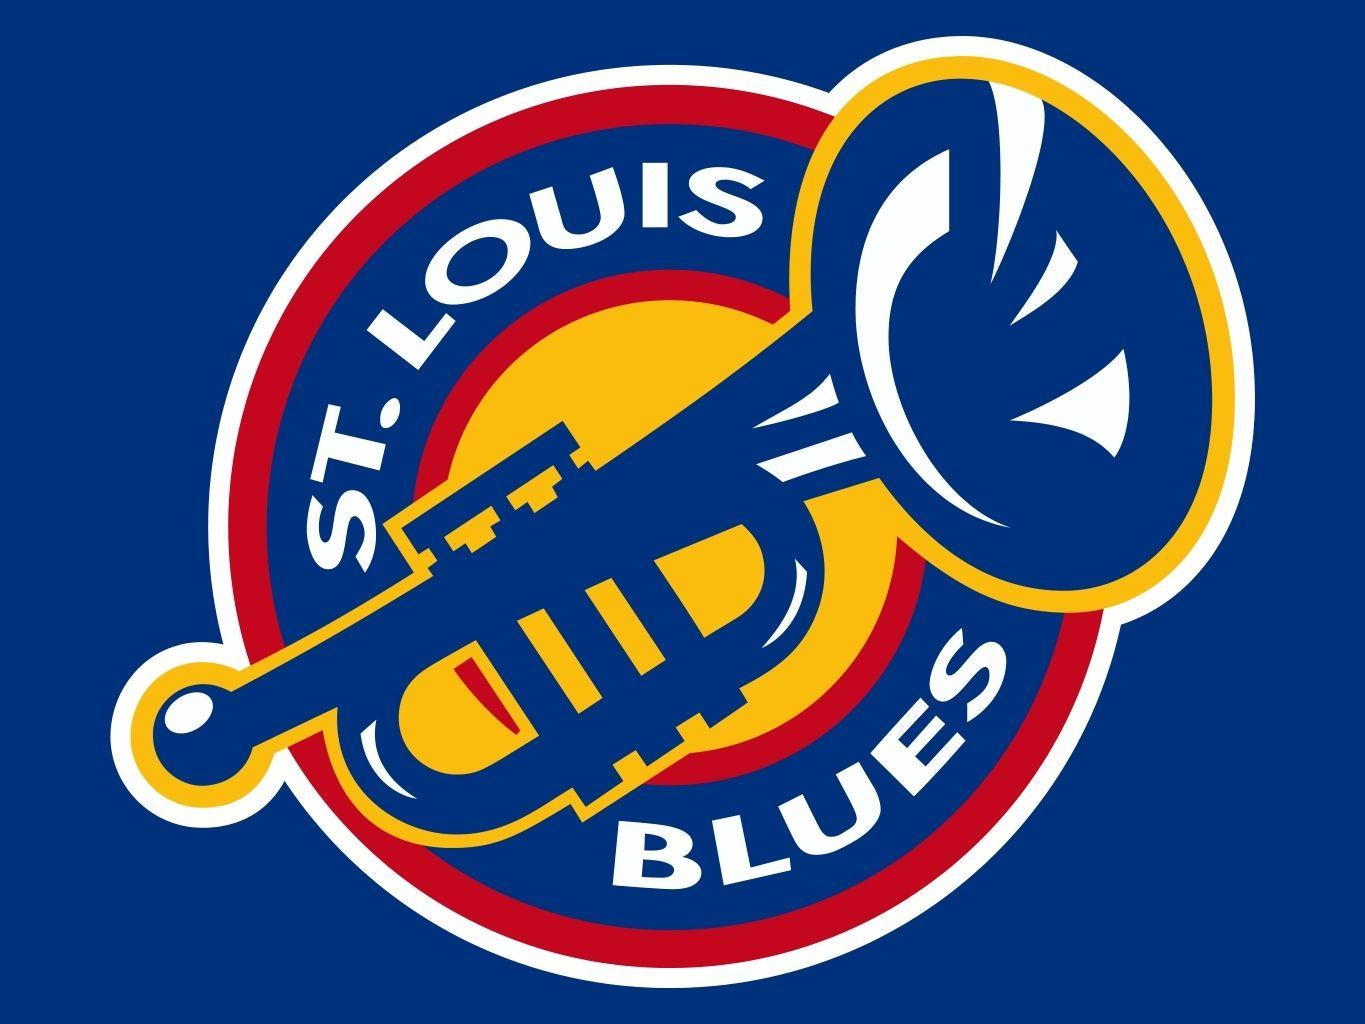 St. Louis Blues Cool Wallpaper 26546 Image. wallgraf